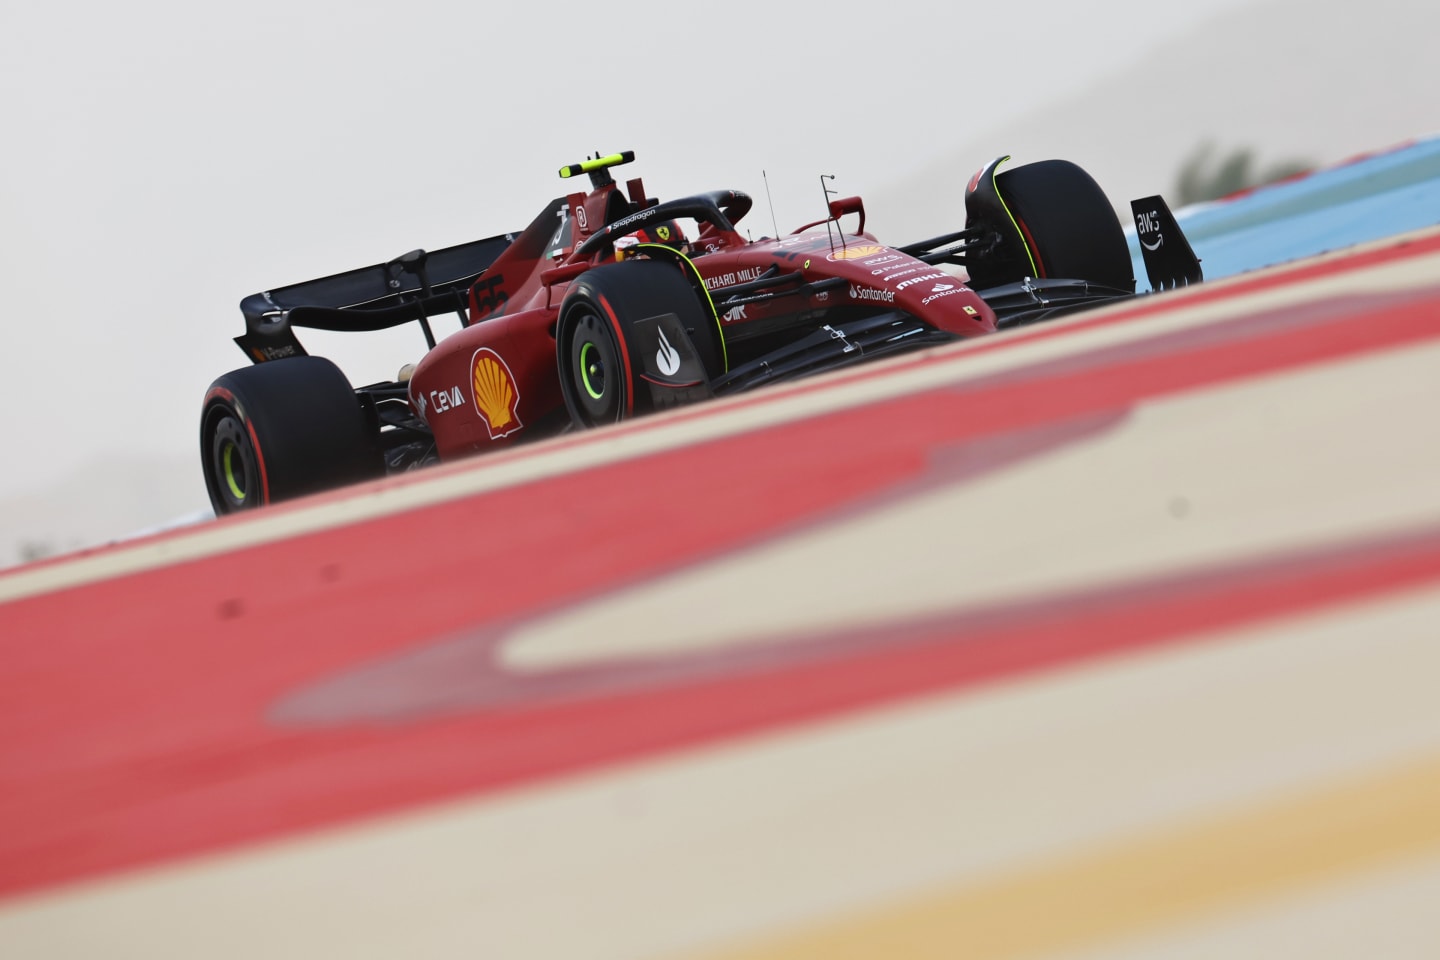 BAHRAIN, BAHRAIN - MARCH 11: Carlos Sainz of Spain driving the (55) Ferrari SF-75 during Day Two of F1 Testing at Bahrain International Circuit on March 11, 2022 in Bahrain, Bahrain. (Photo by Mark Thompson/Getty Images)